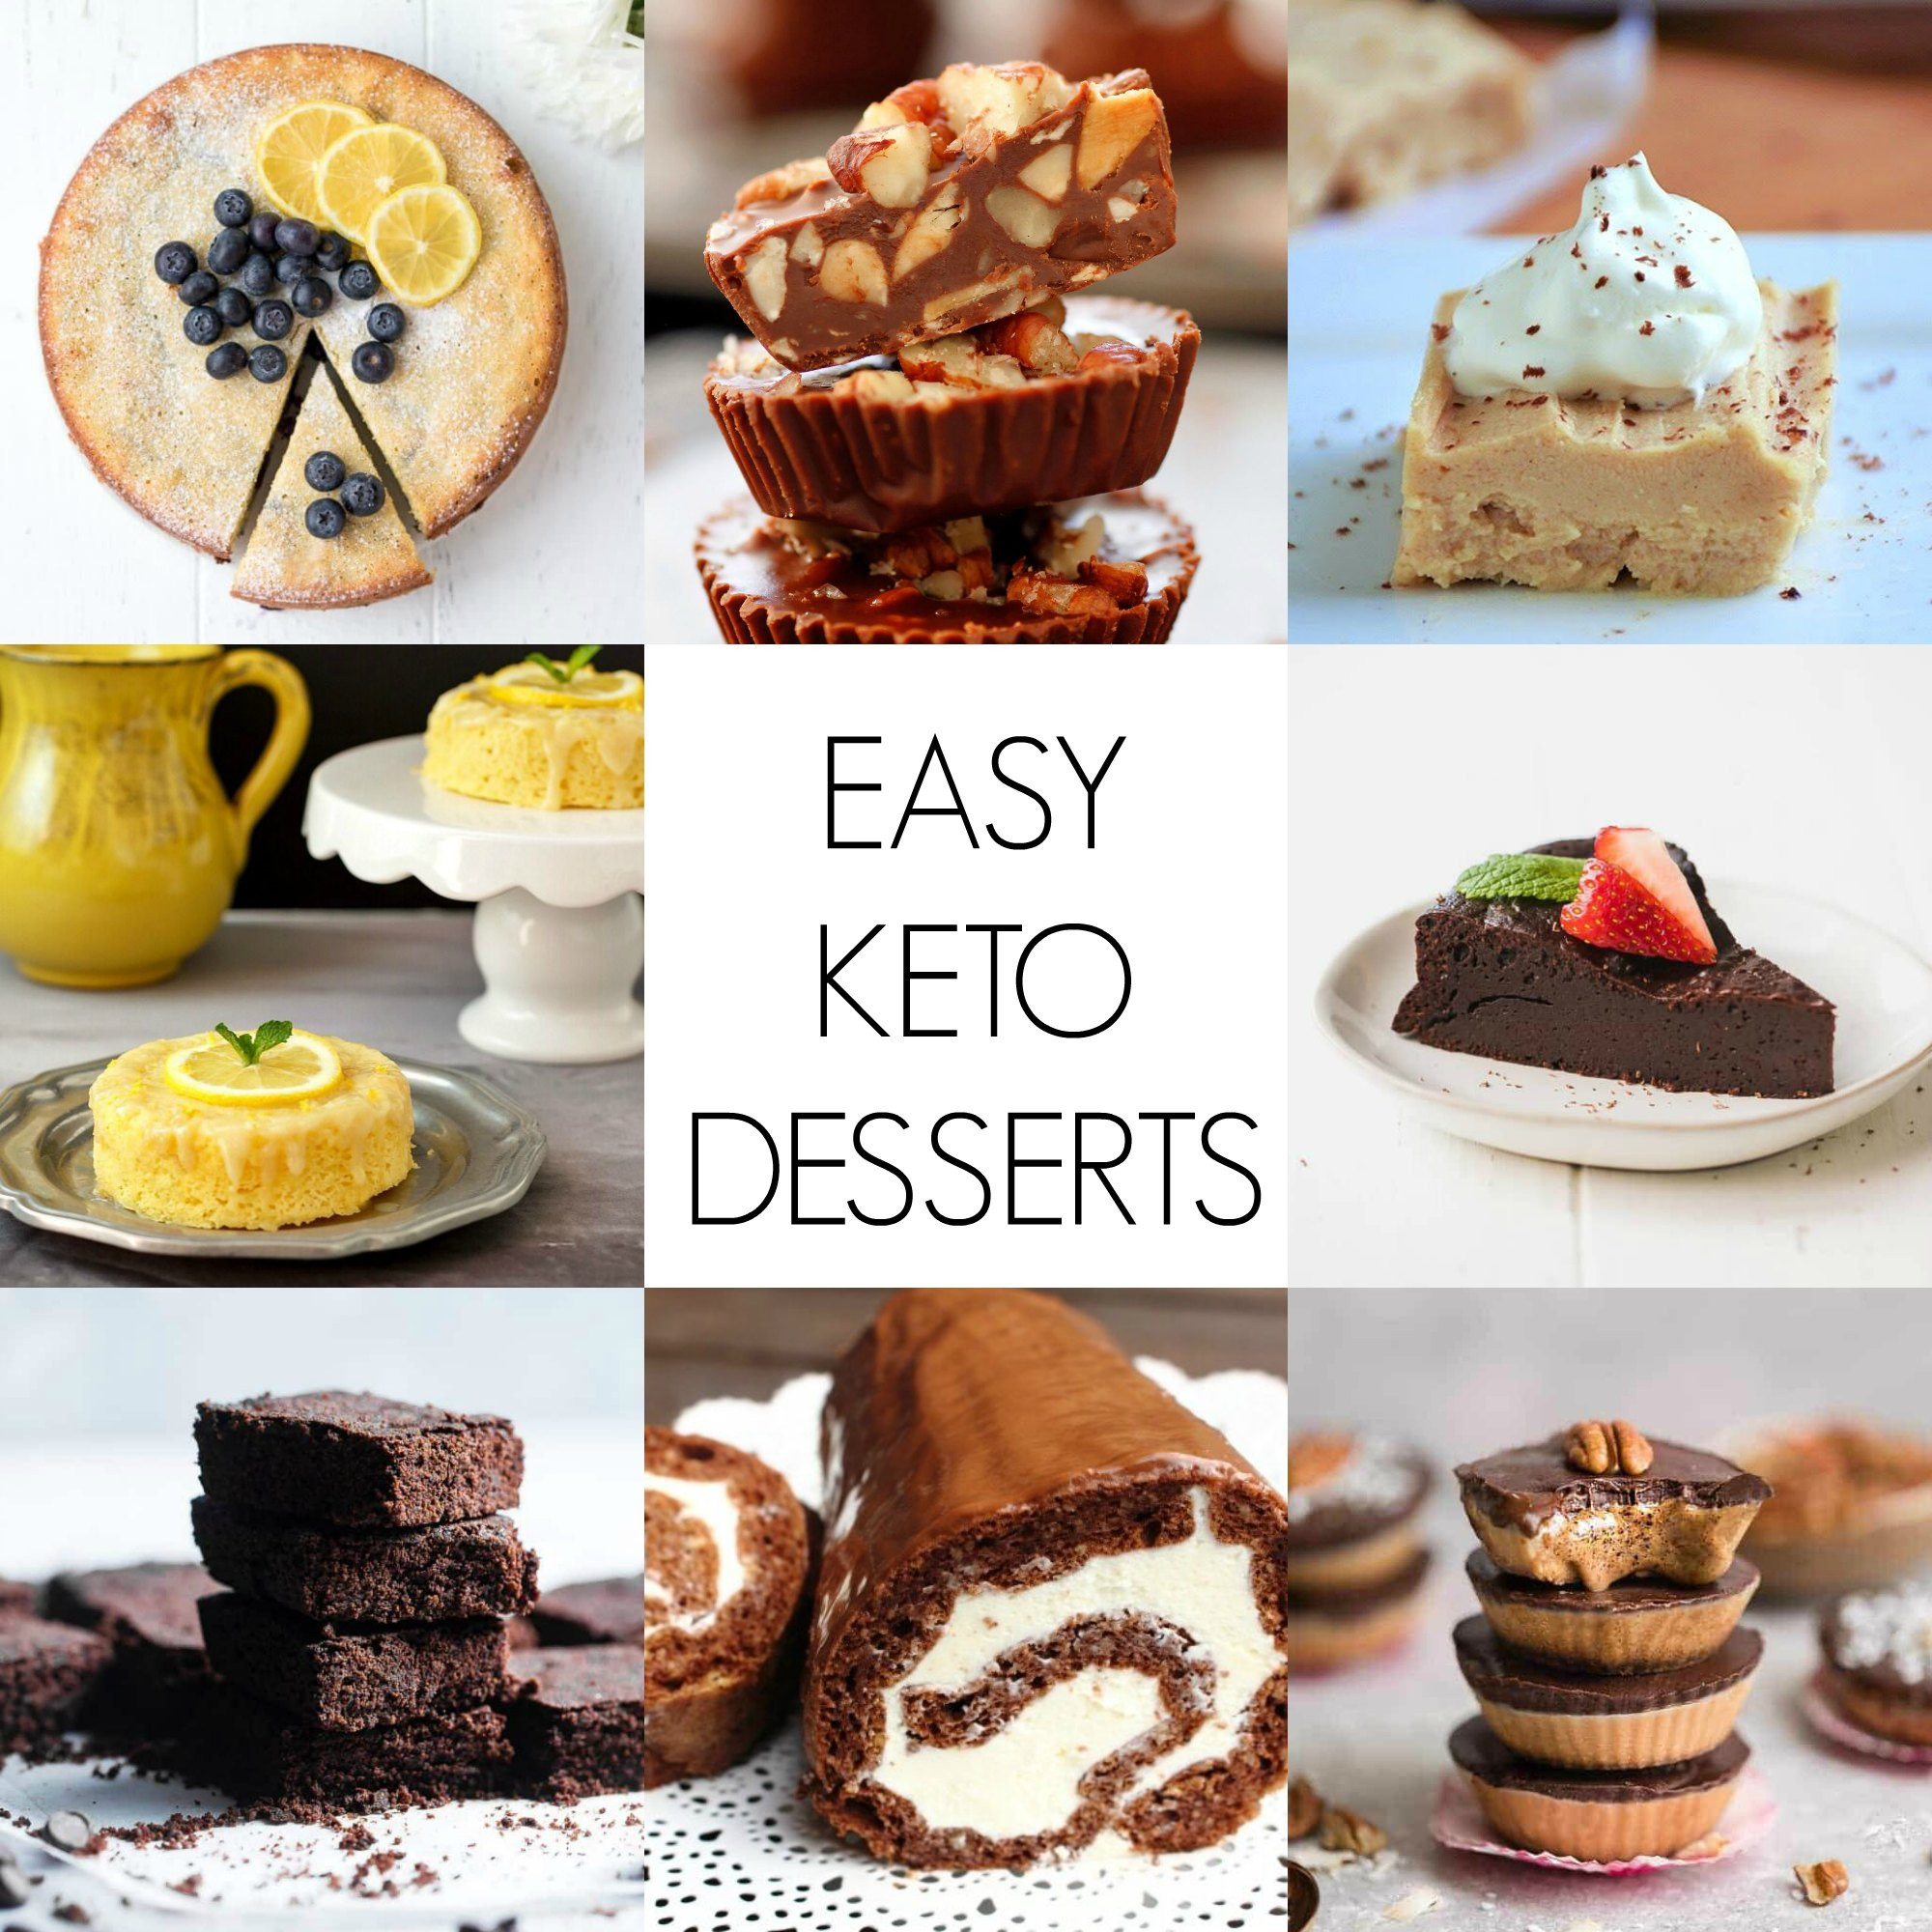 Easy Keto Desserts
 Keto Desserts Quick and Easy Keto Dessert Recipes